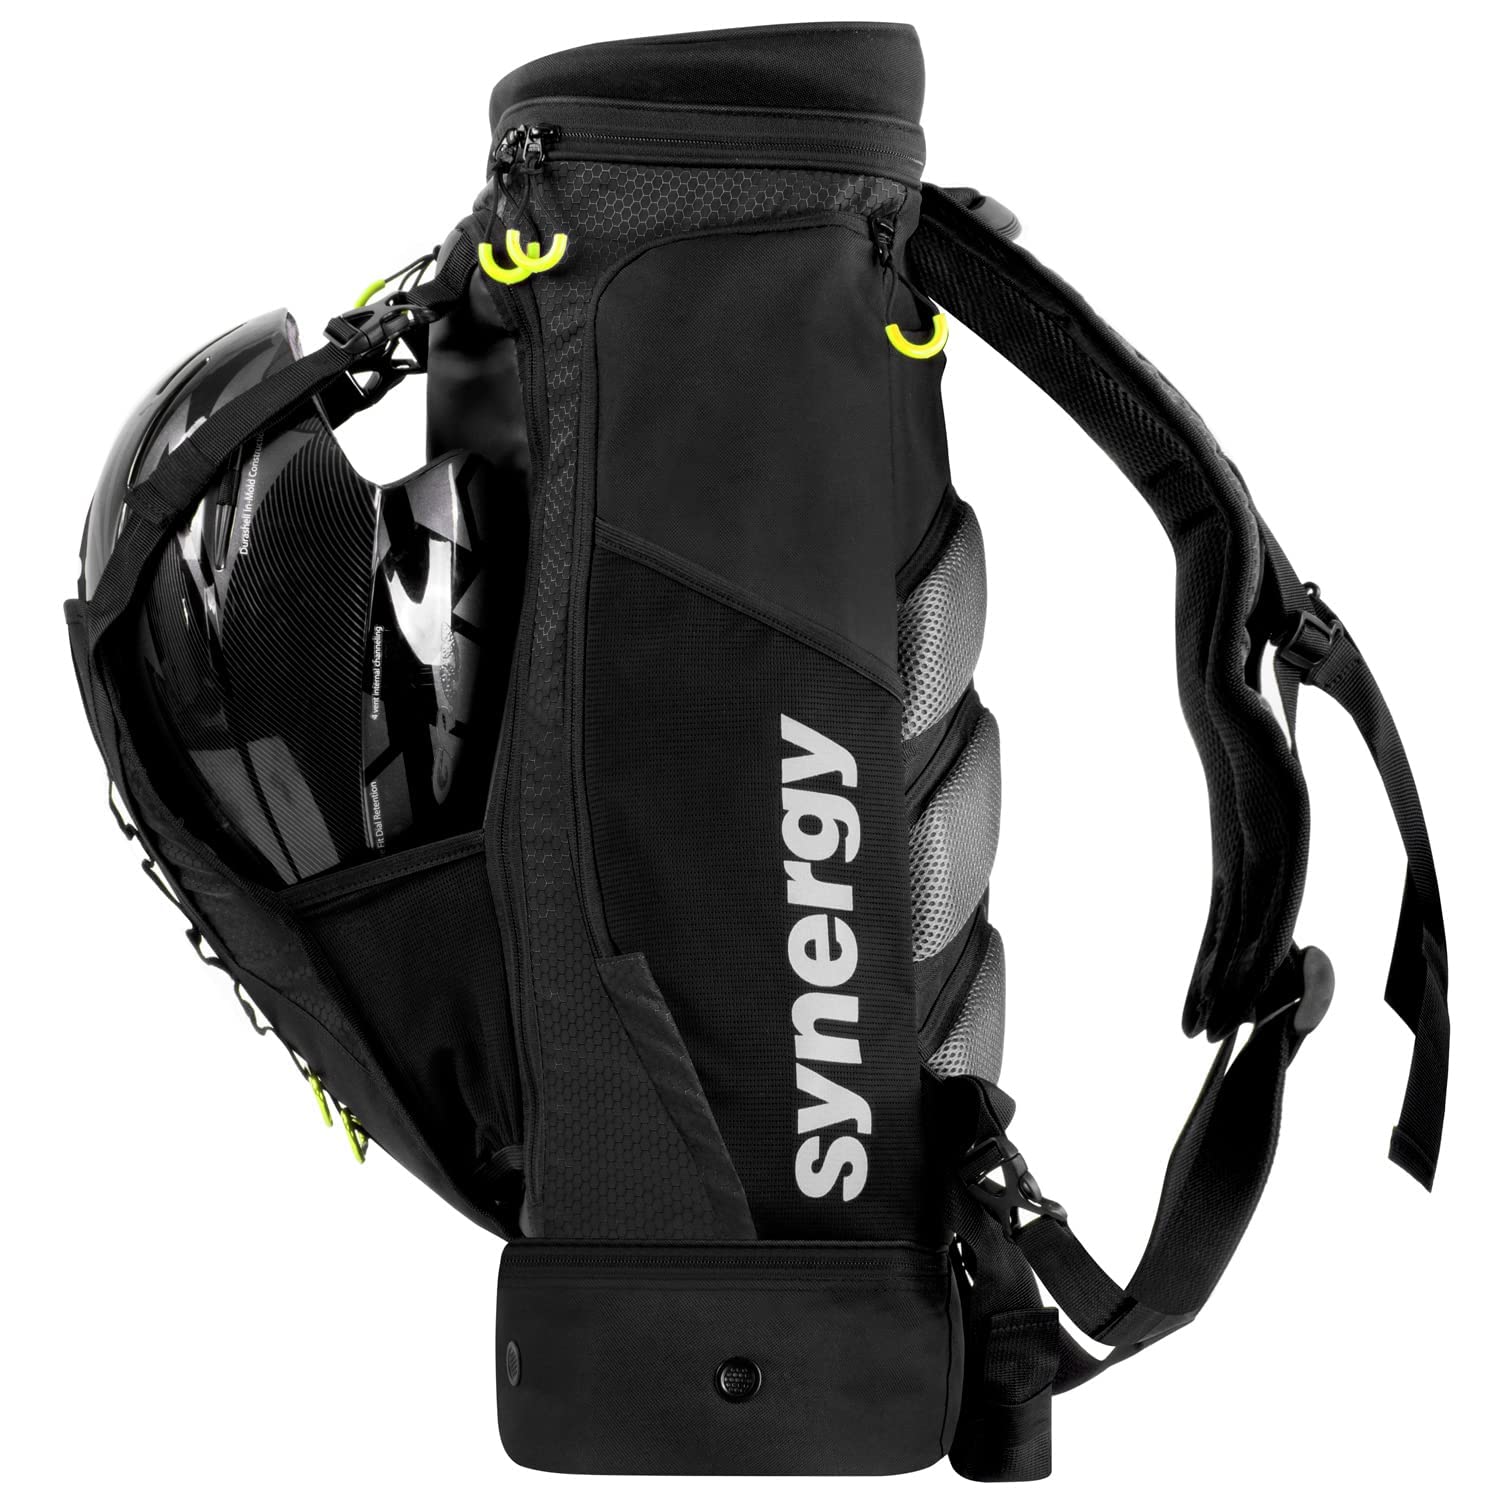 Triathlon Transition Bag - Wetsuits